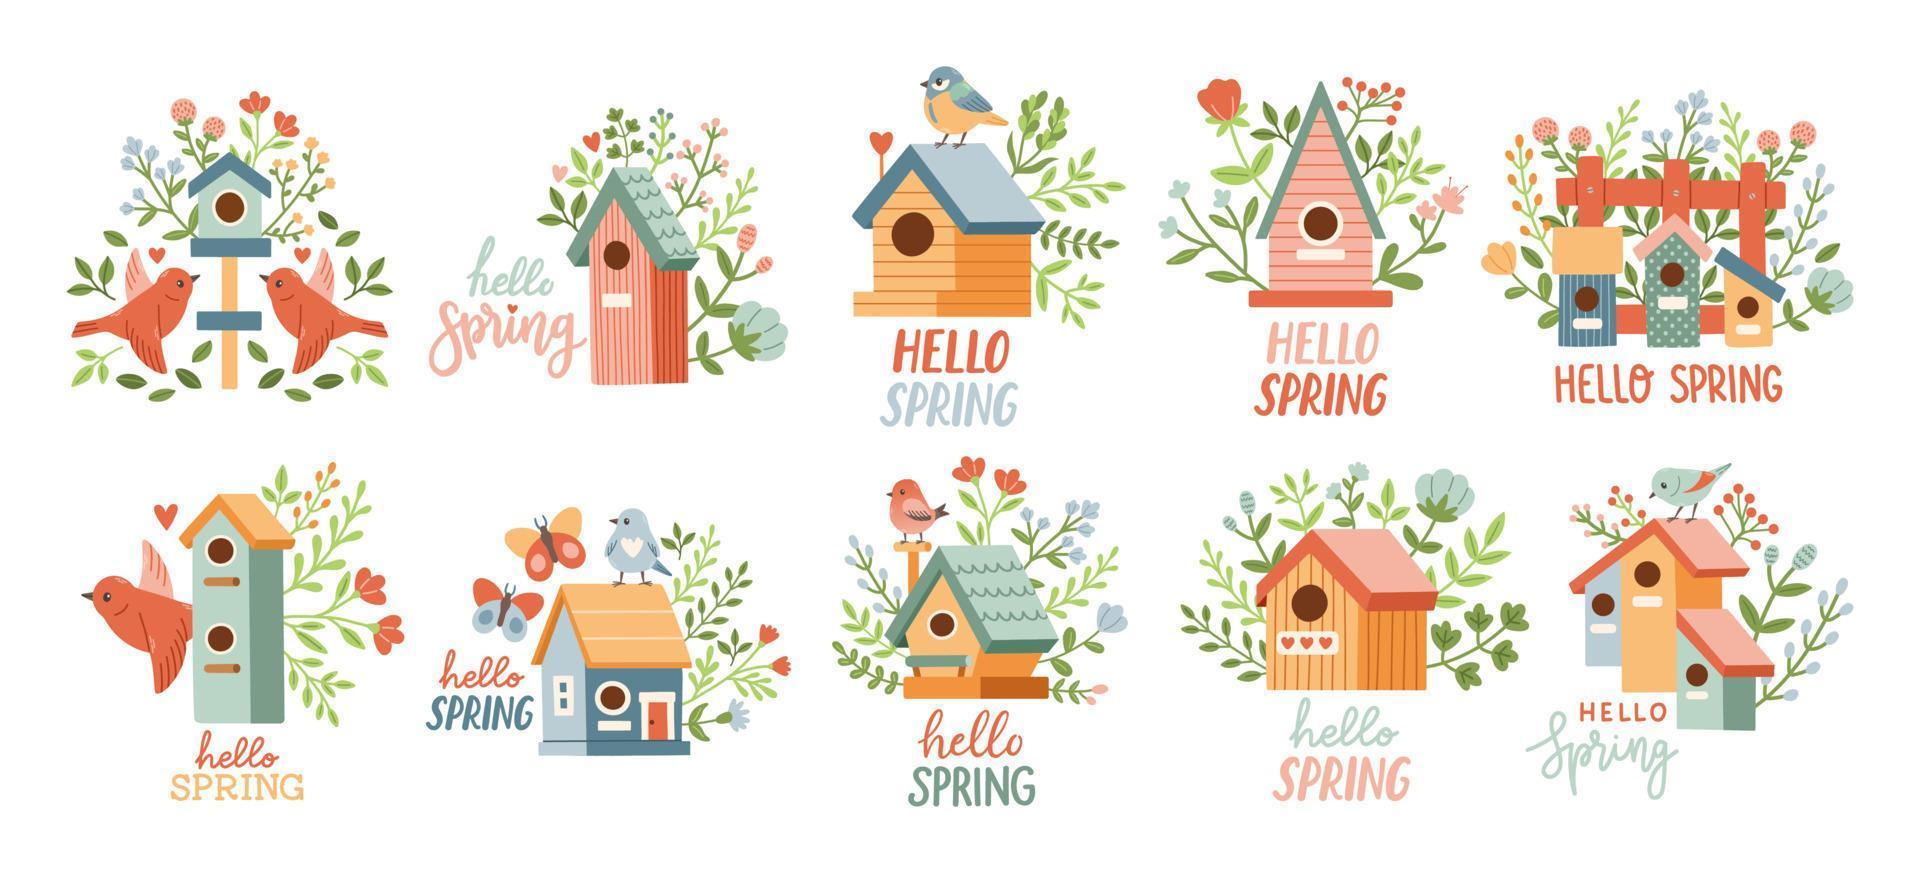 primavera pajarera colocar. primavera estado animico saludo tarjeta modelo. Bienvenido primavera invitación. minimalista tarjeta postal casita para pájaros vector